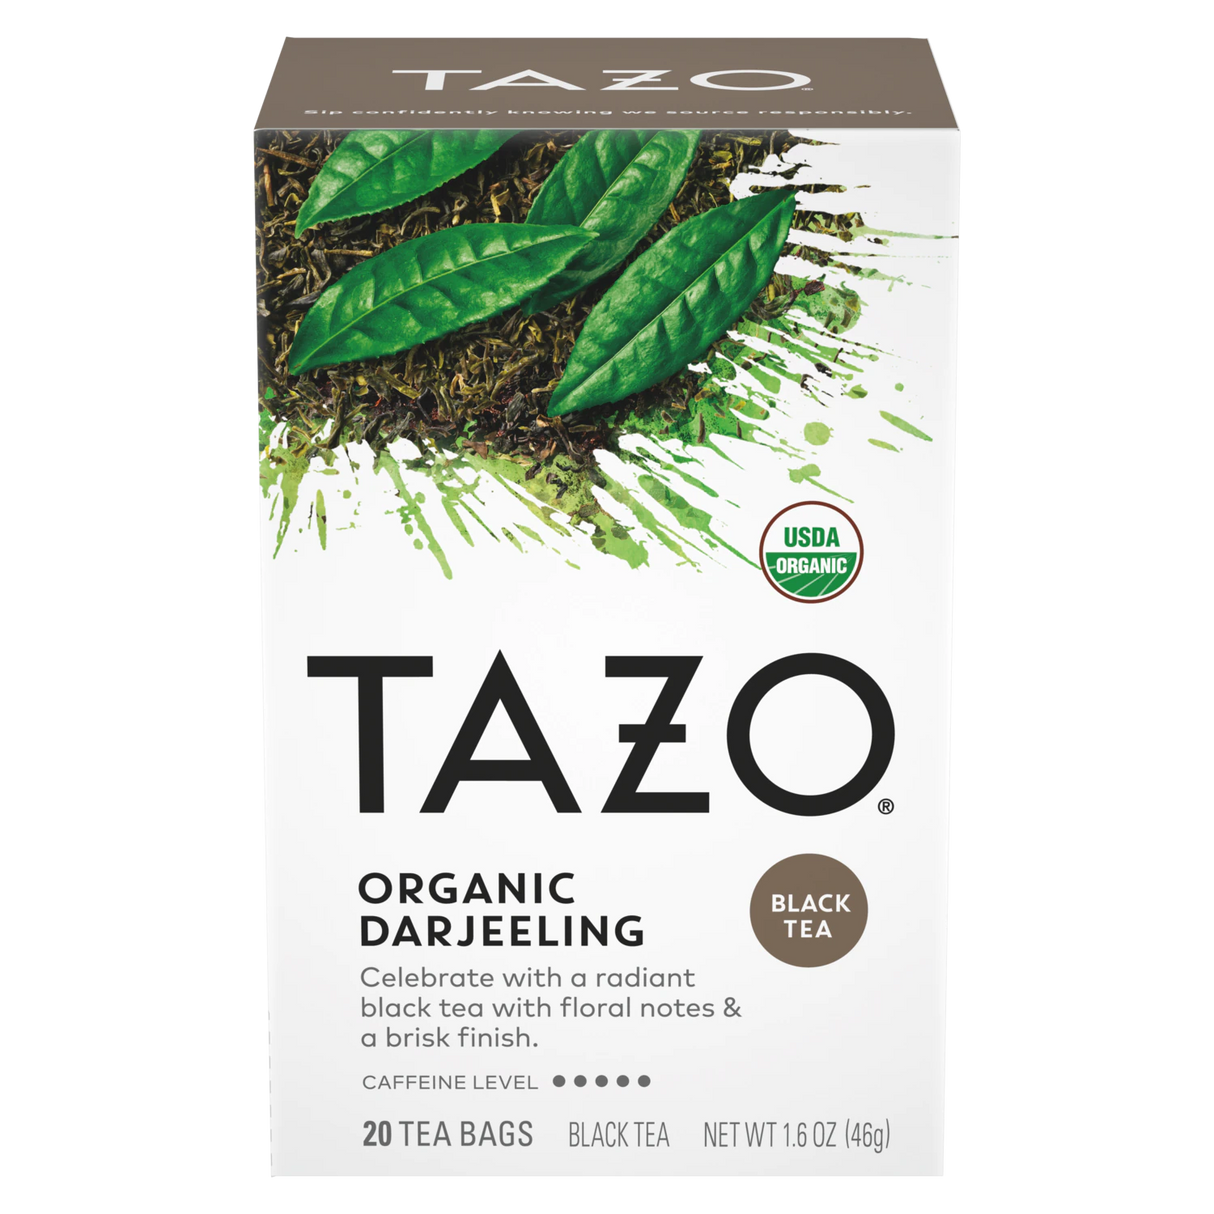 Tazo Darjeeling Tea 16-Bag Pack - Cozy Farm 